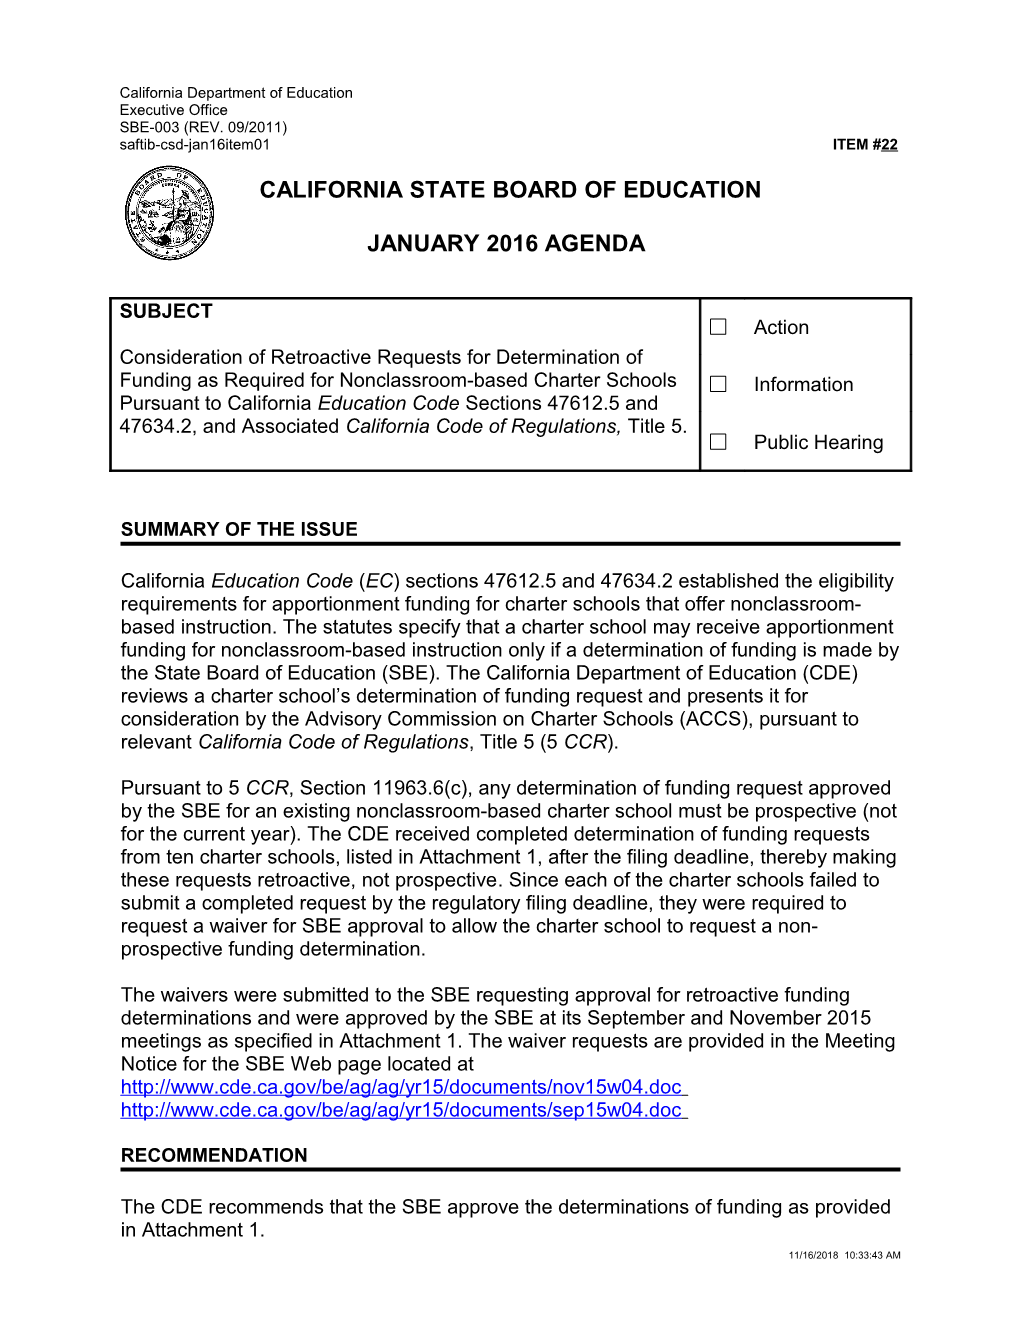 January 2016 Agenda Item 22 - Meeting Agendas (CA State Board of Education)